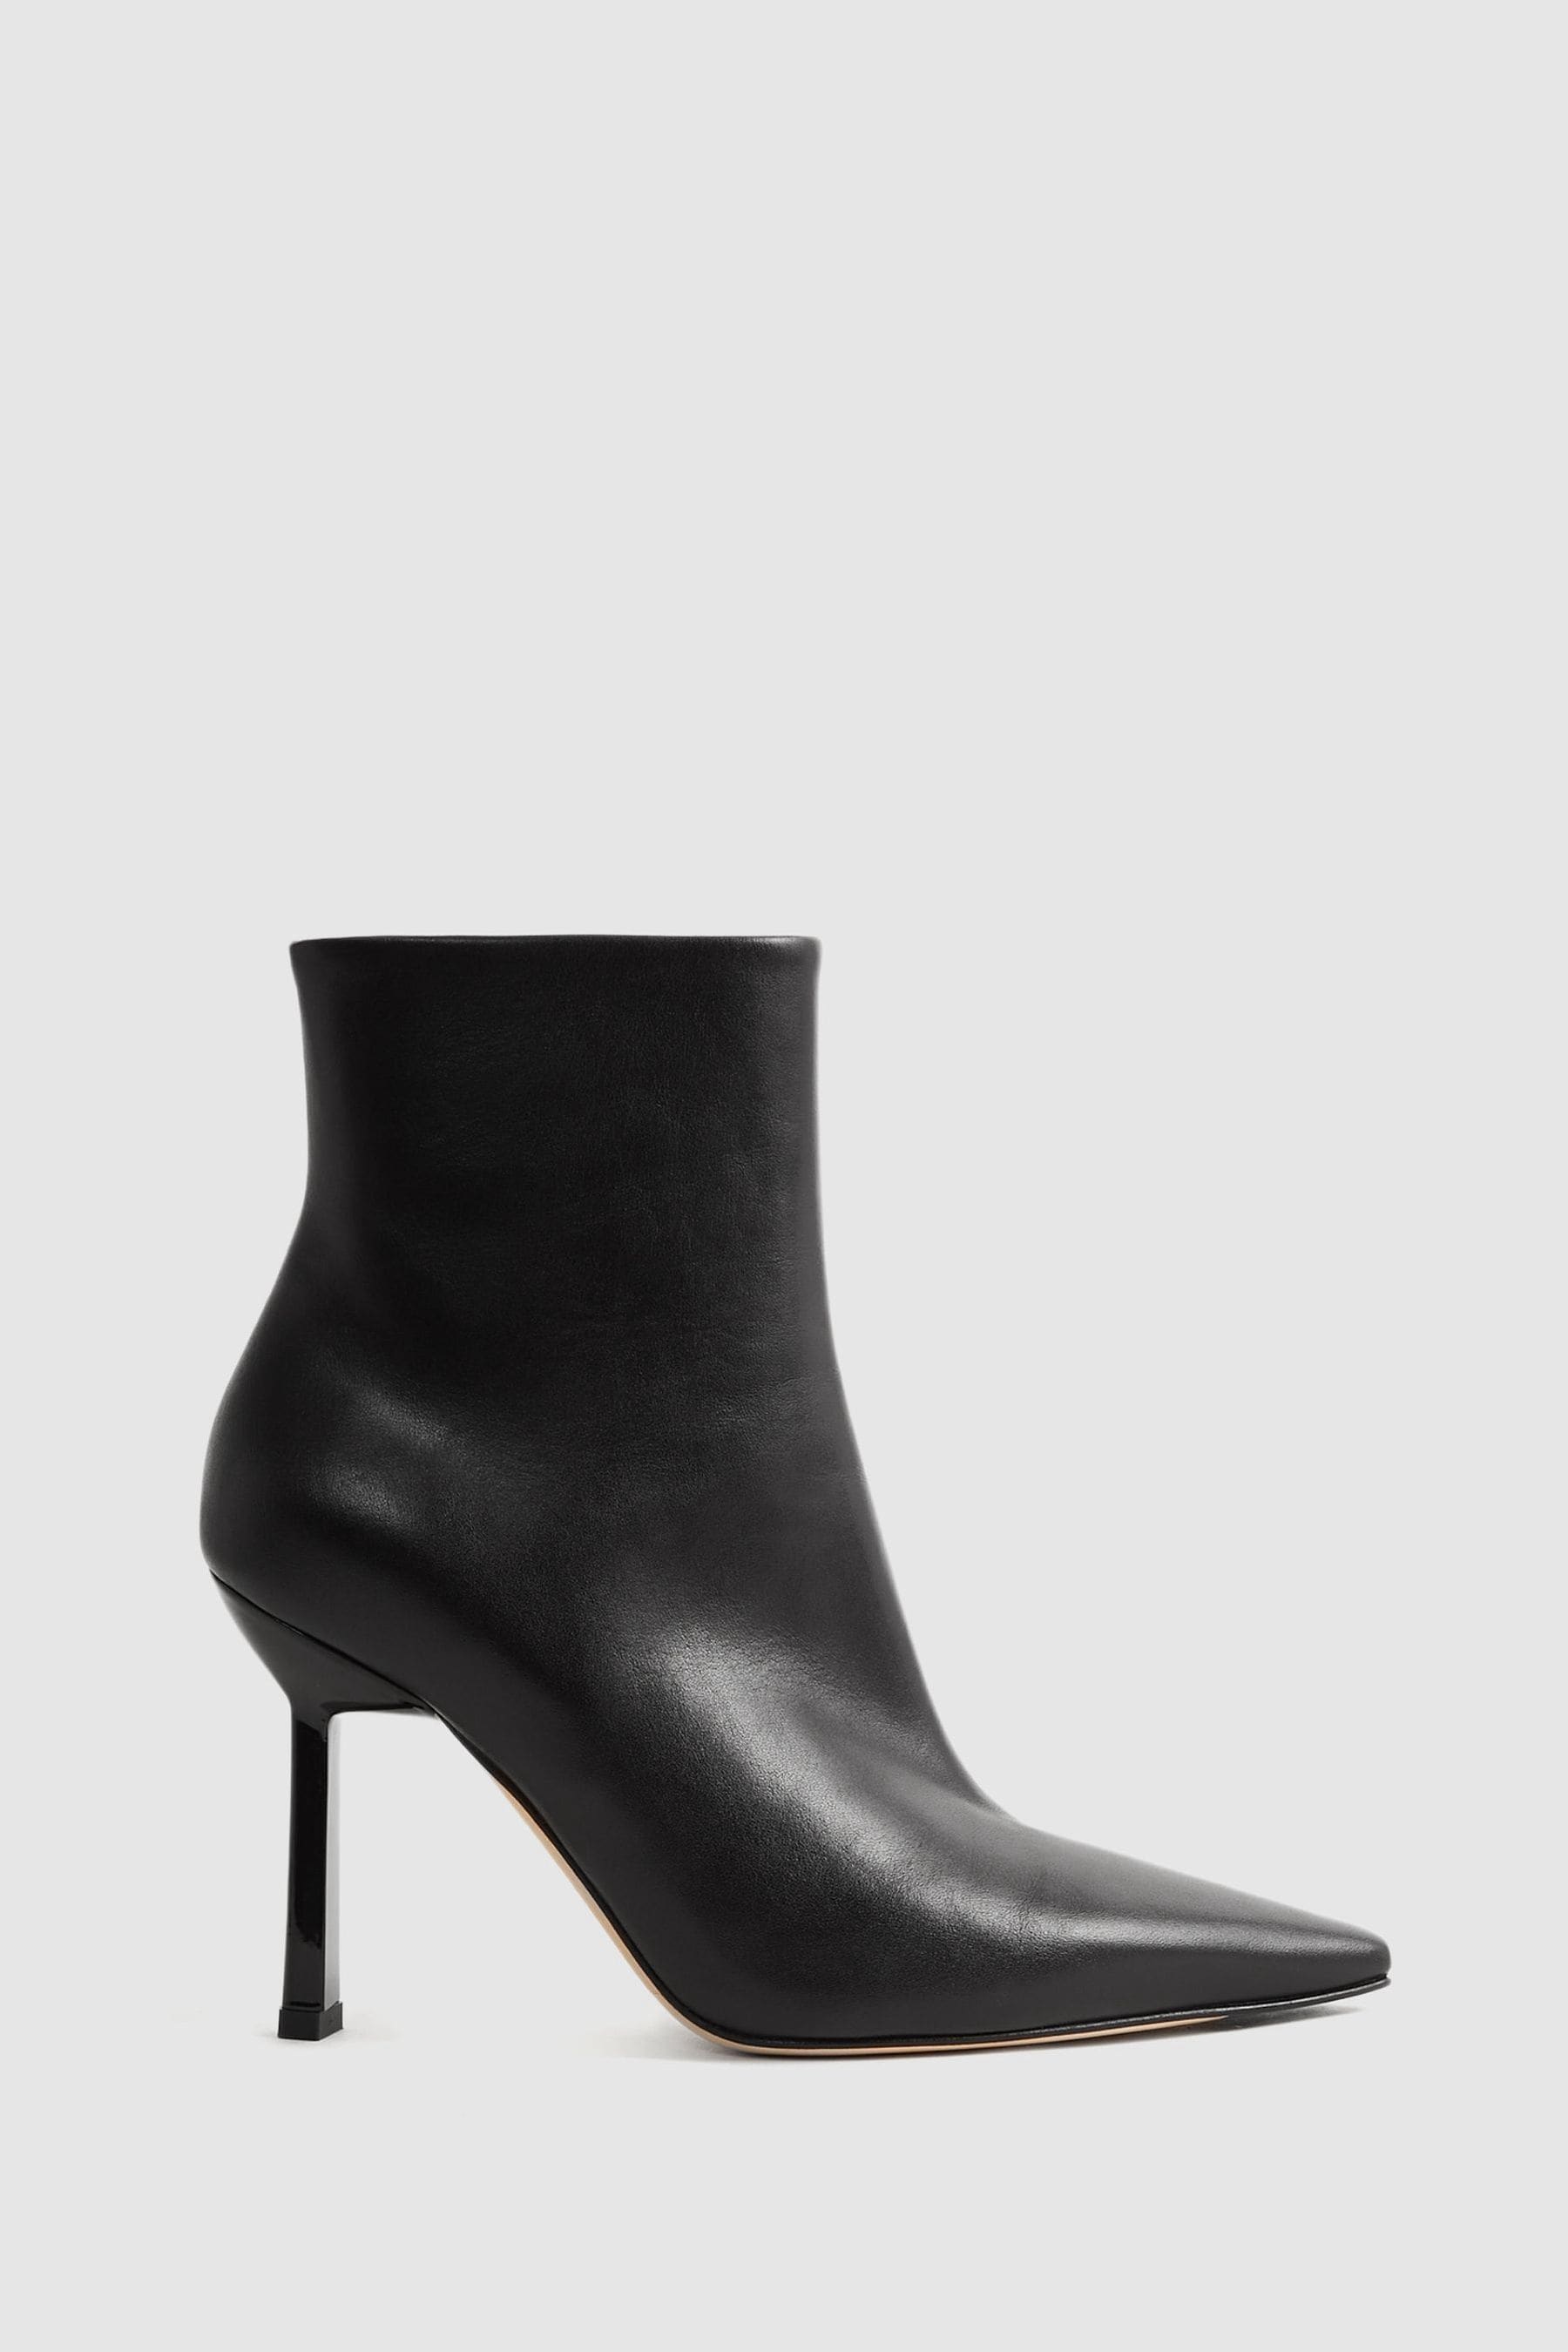 Reiss Scarlett - Black Italian Leather Heeled Ankle Boots, Us 10